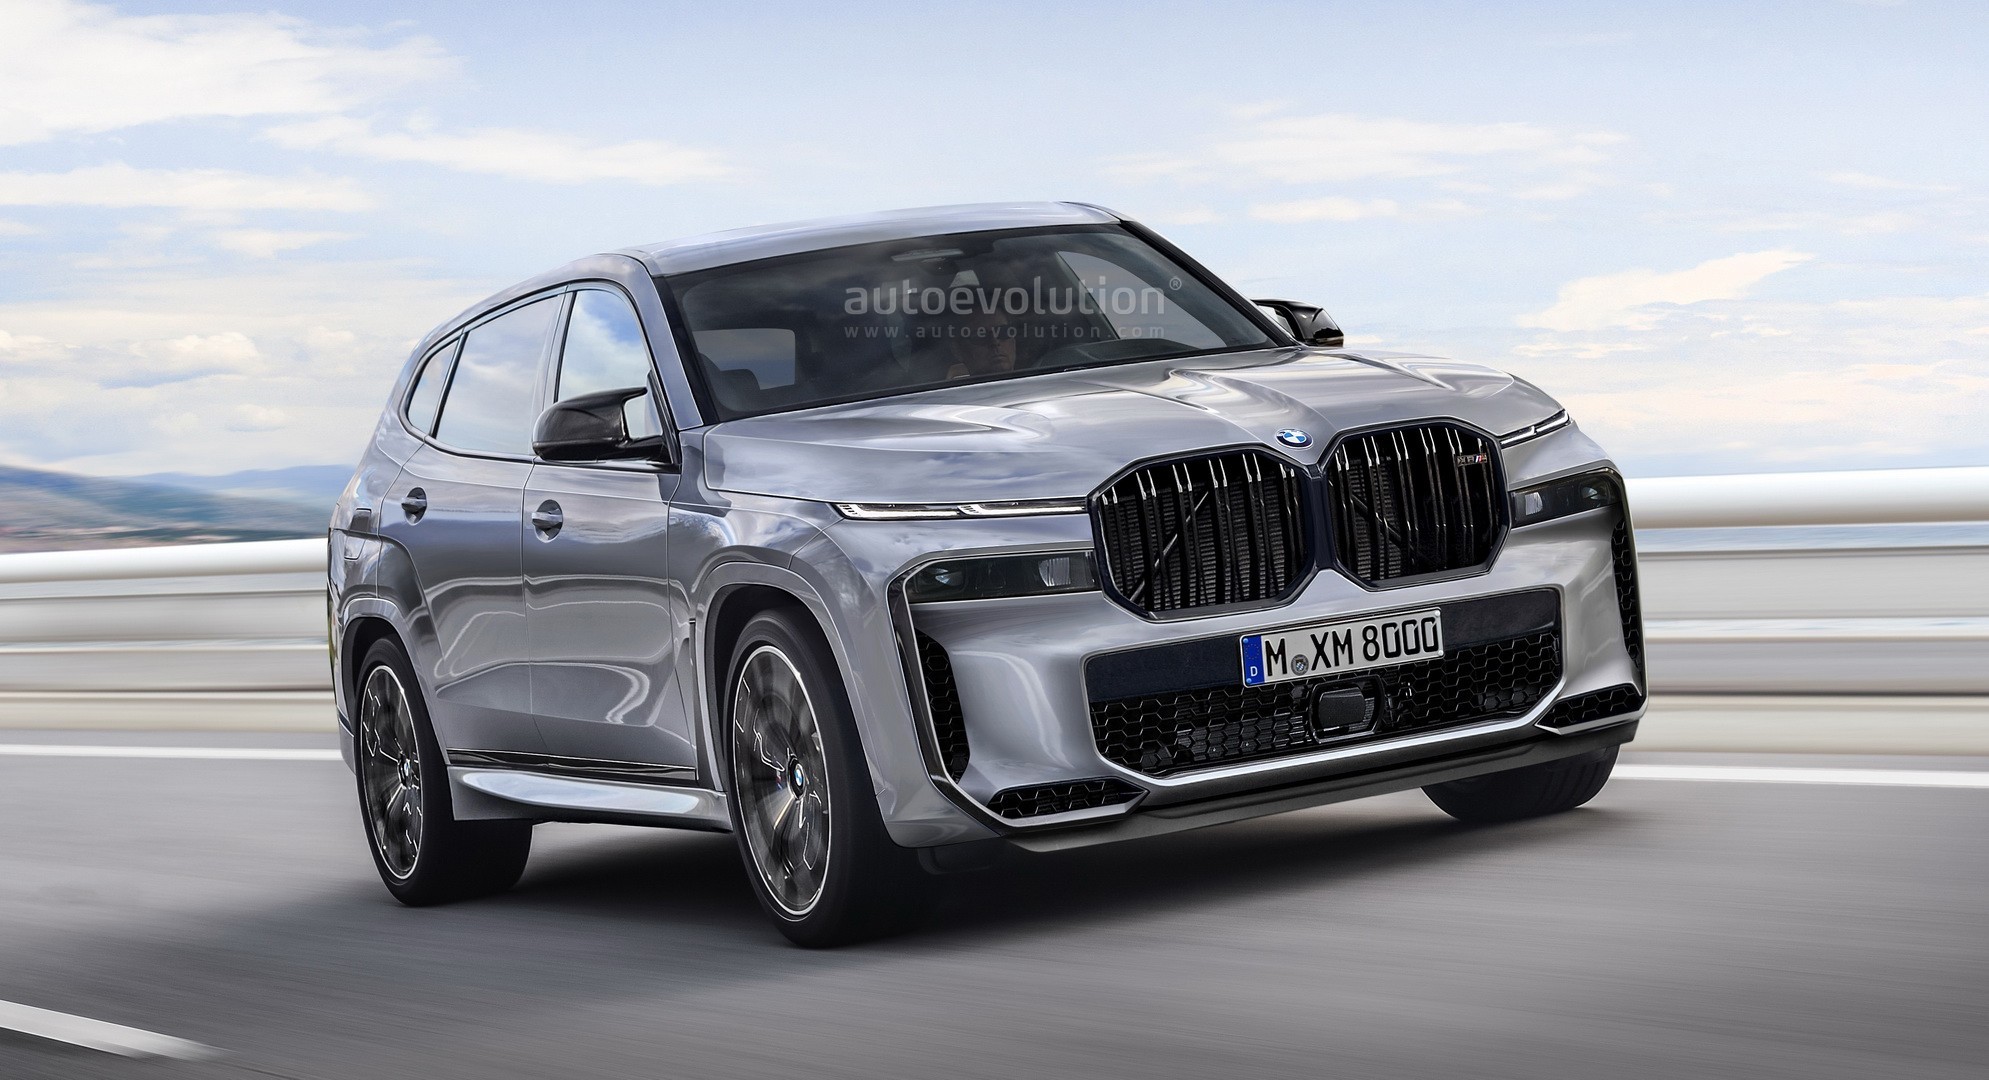 BMW X8 M Plugin Hybrid SUV Concept Confirmed for November 29 Debut